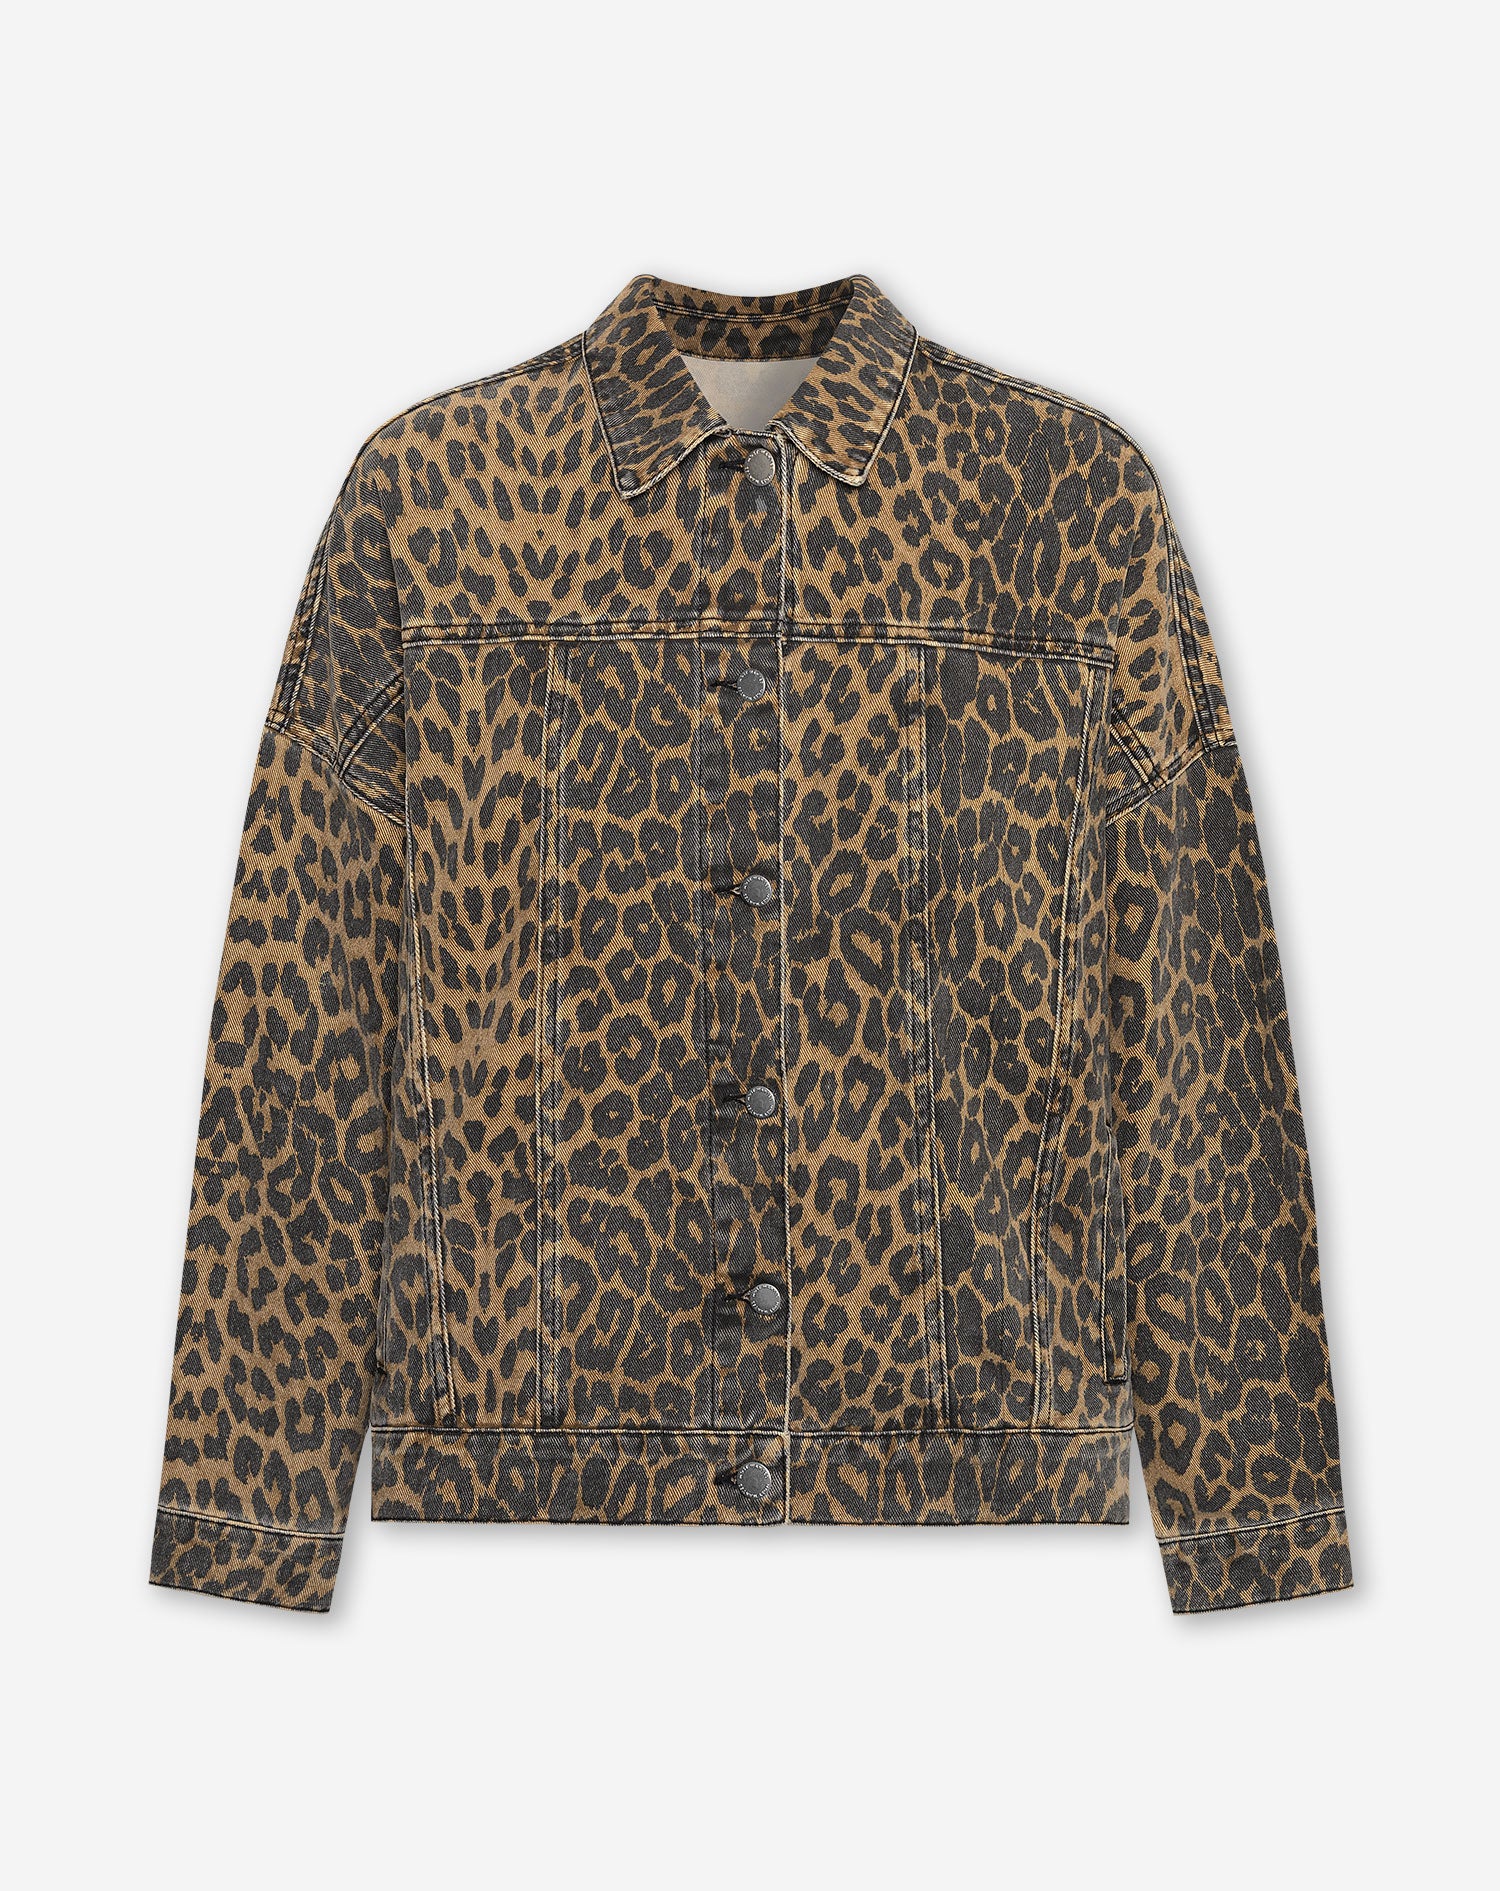 Nine West Women's Sarah Denim Jean Jacket Leopard Print Small | eBay